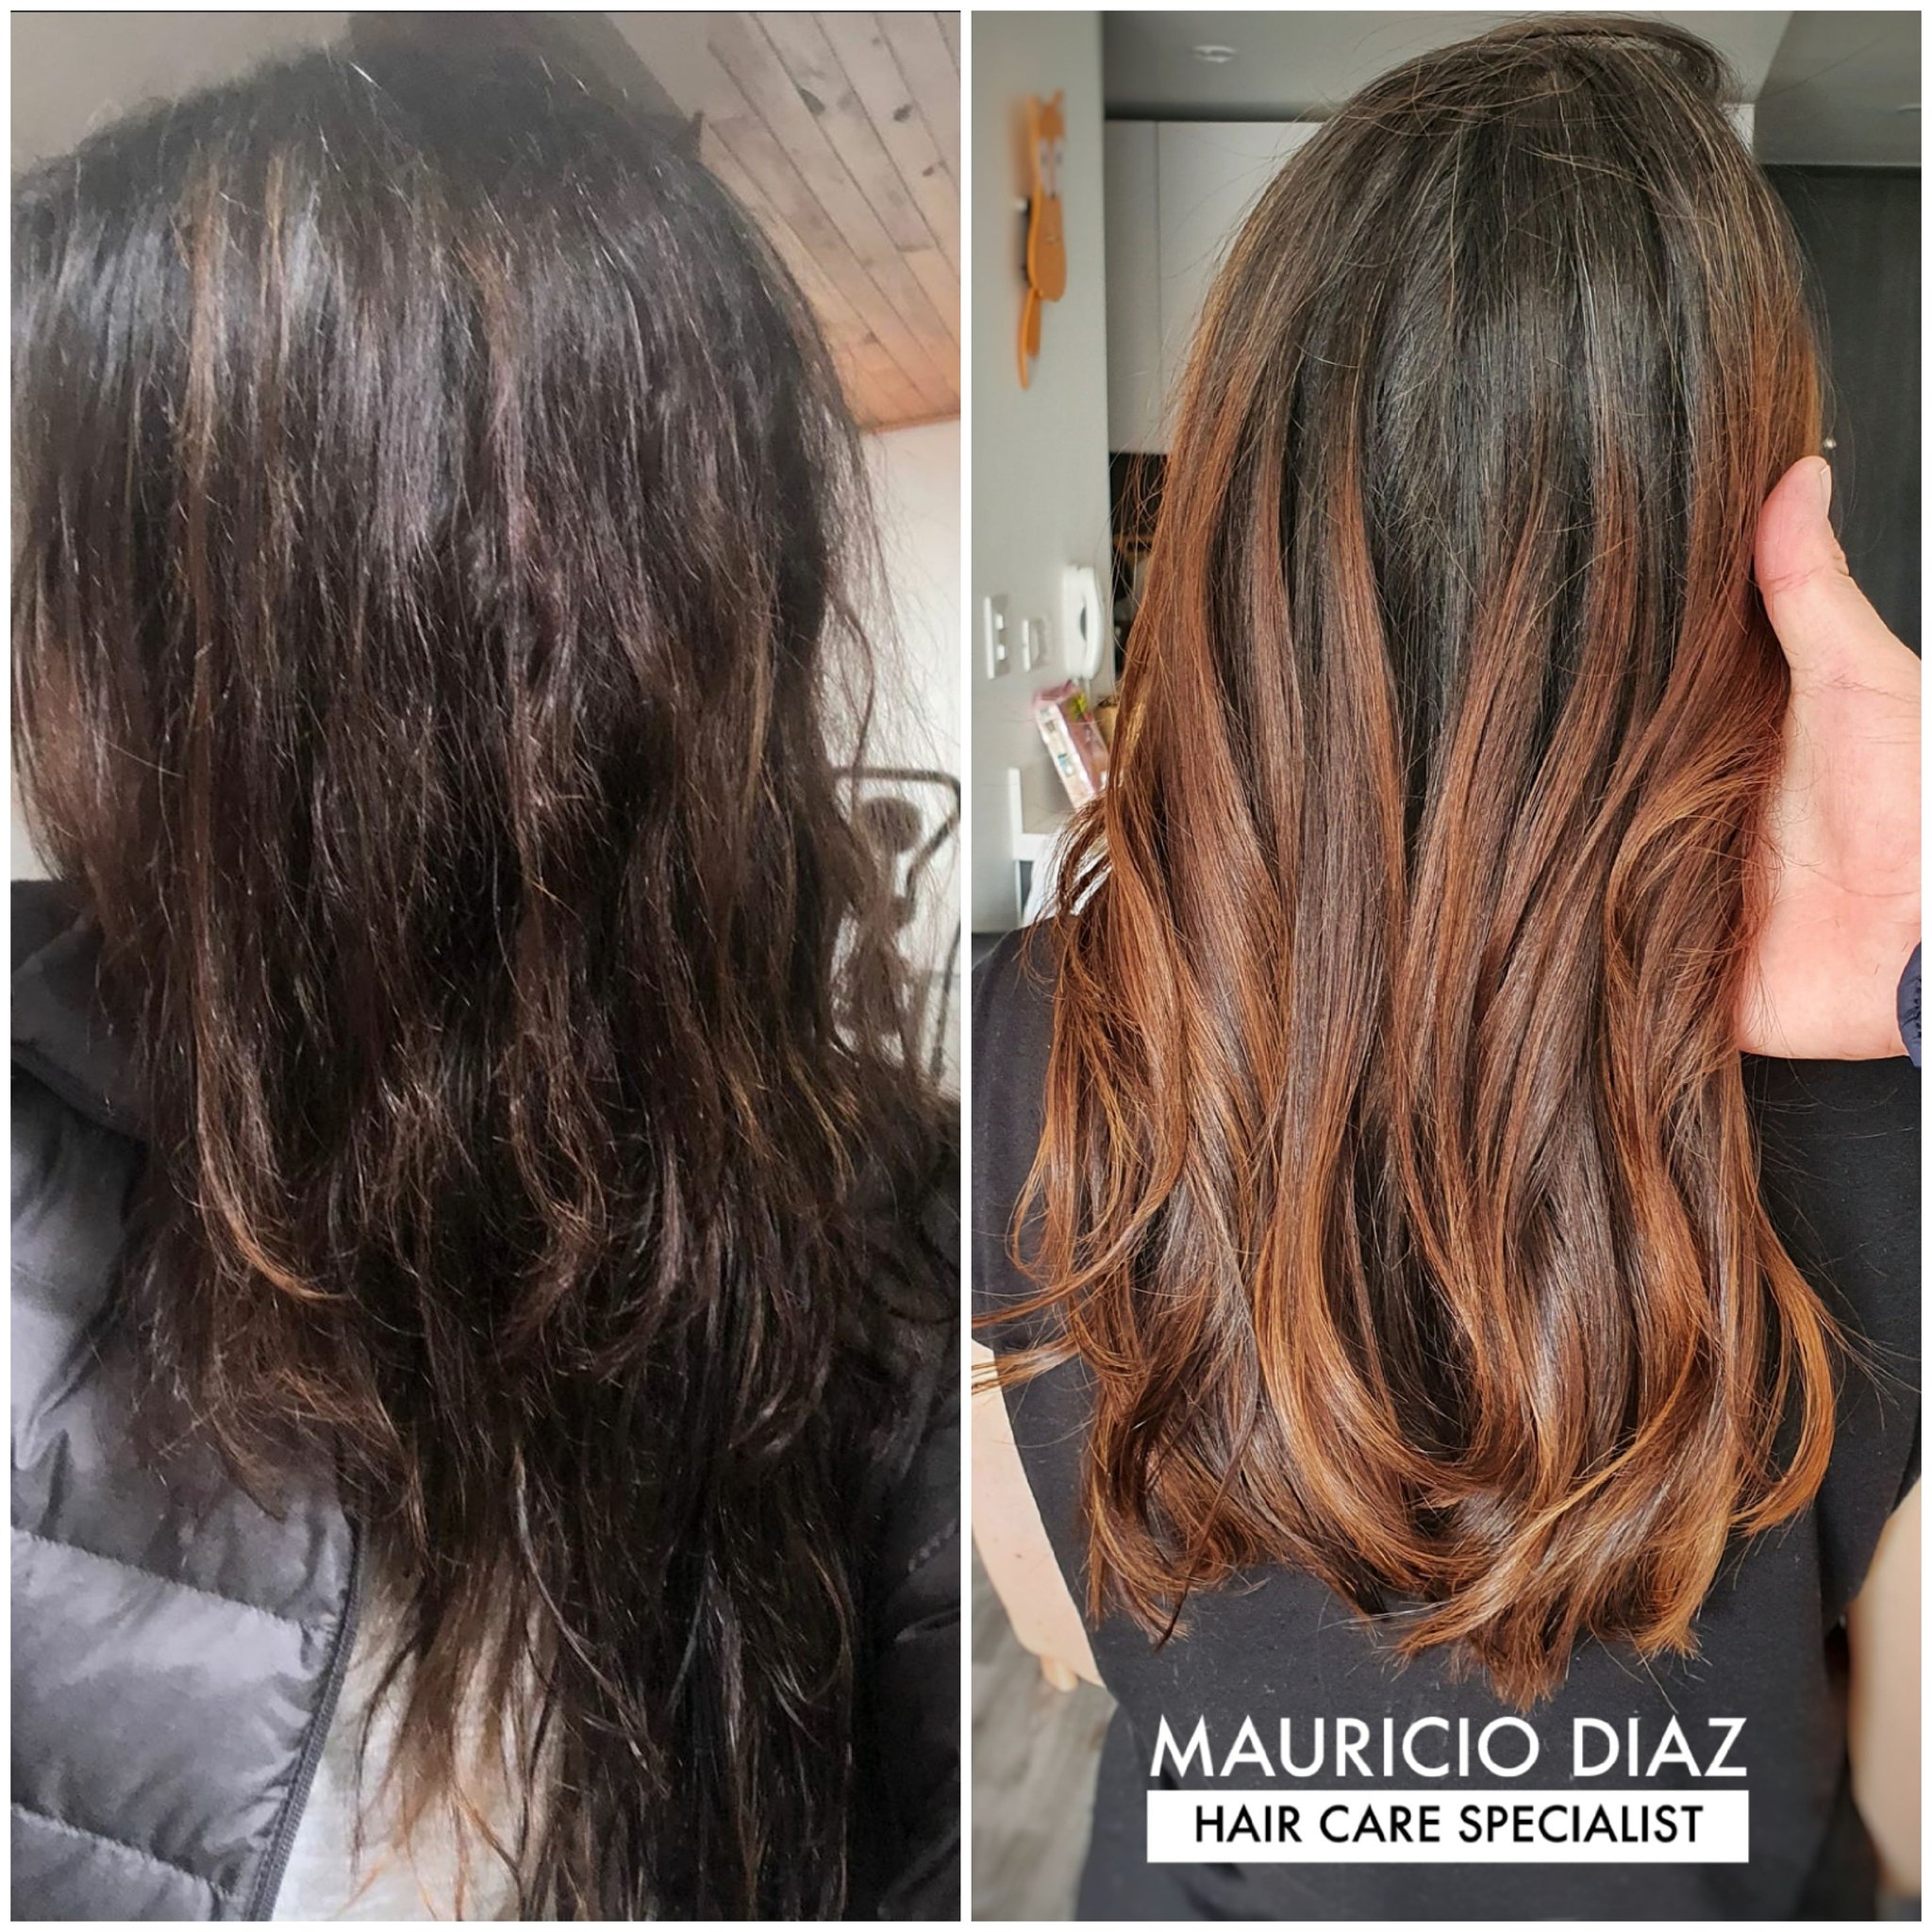 MauroDiazHairCare on y después, Tratamiento de células madre, de la fibra capilar que logra dar resistencia y brillo al cabello. #haircare #haircolor #hairsalon #haircut #hair #cabello #pelo #peluqueria #bogota #